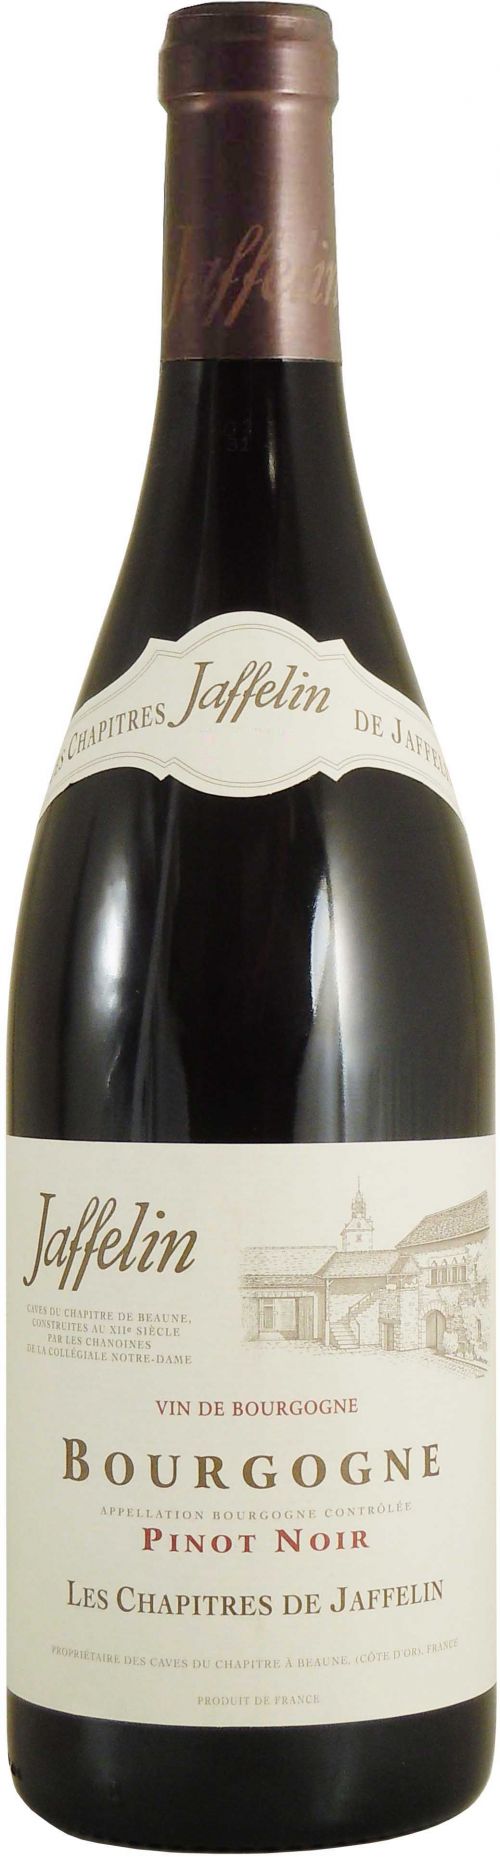 Bourgogne Pinot Noir Les Chapitres de Jaffelin, Maison Jaffelin